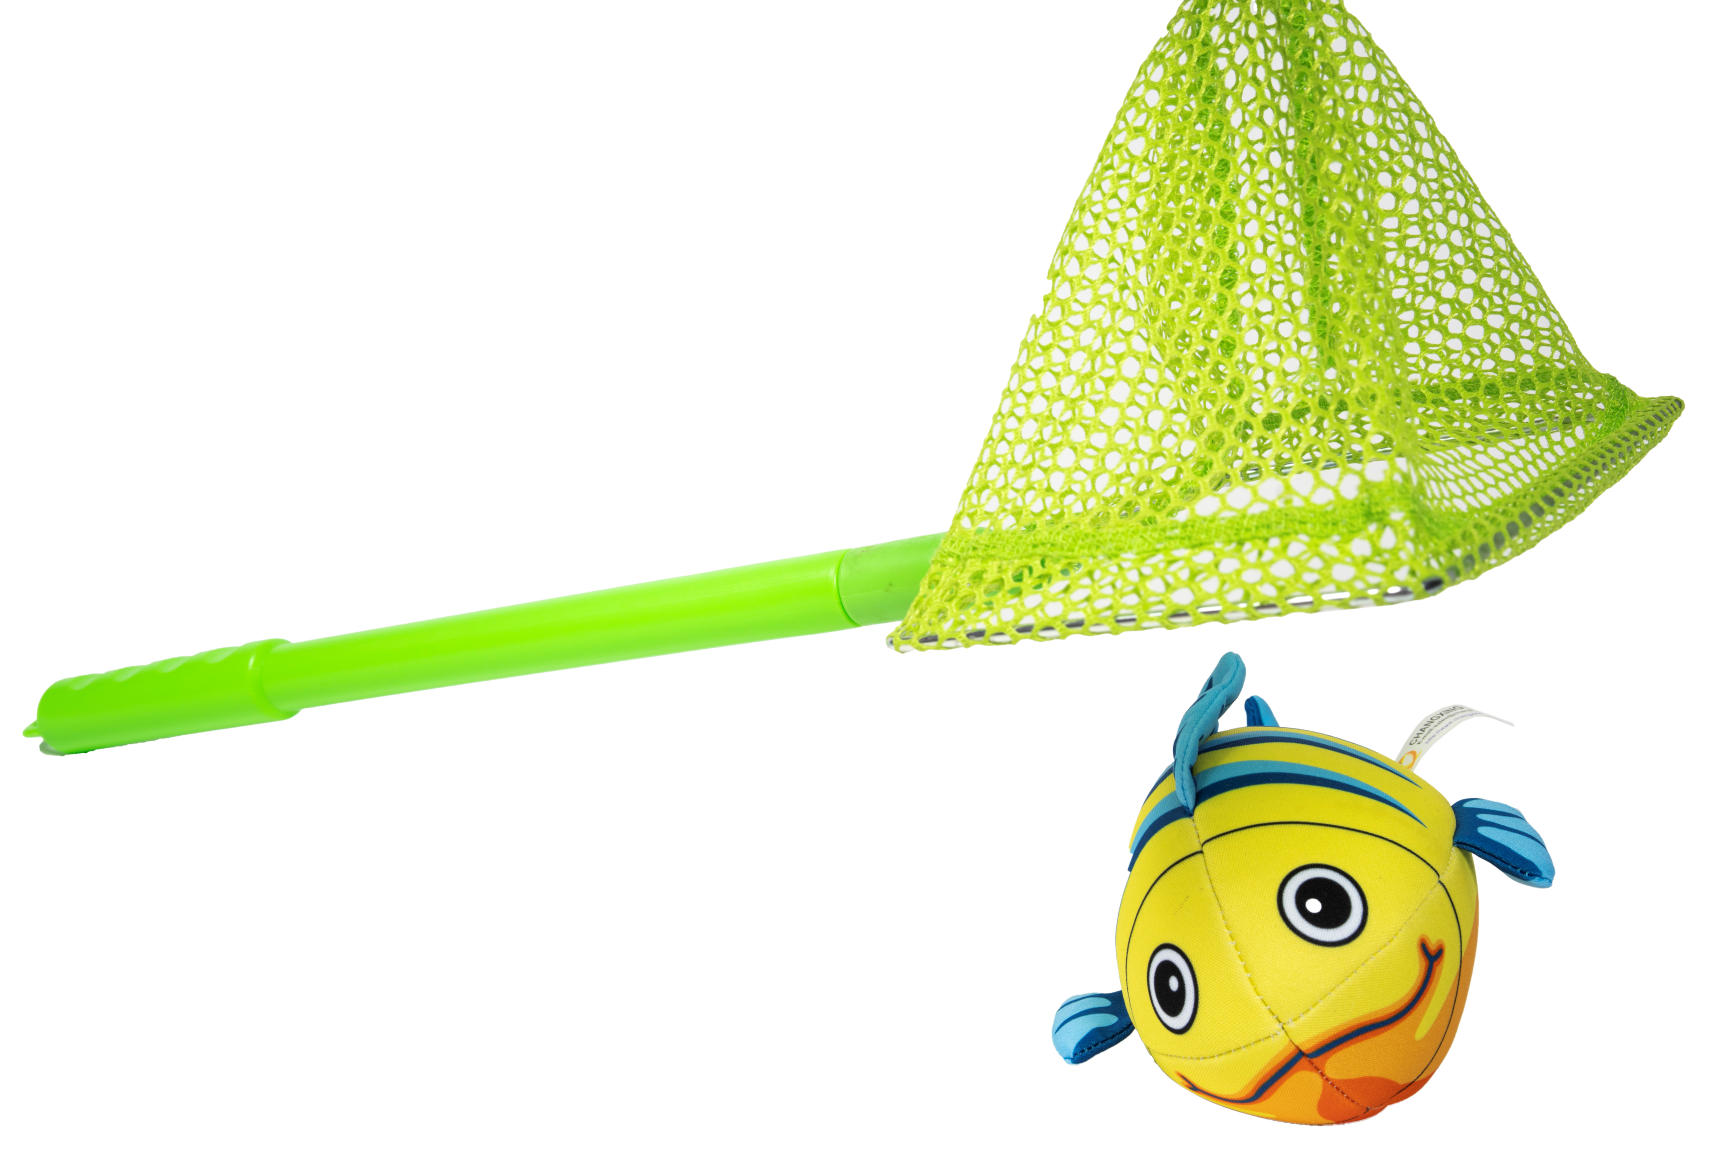 Fish Net Toy, Bug Catching Net